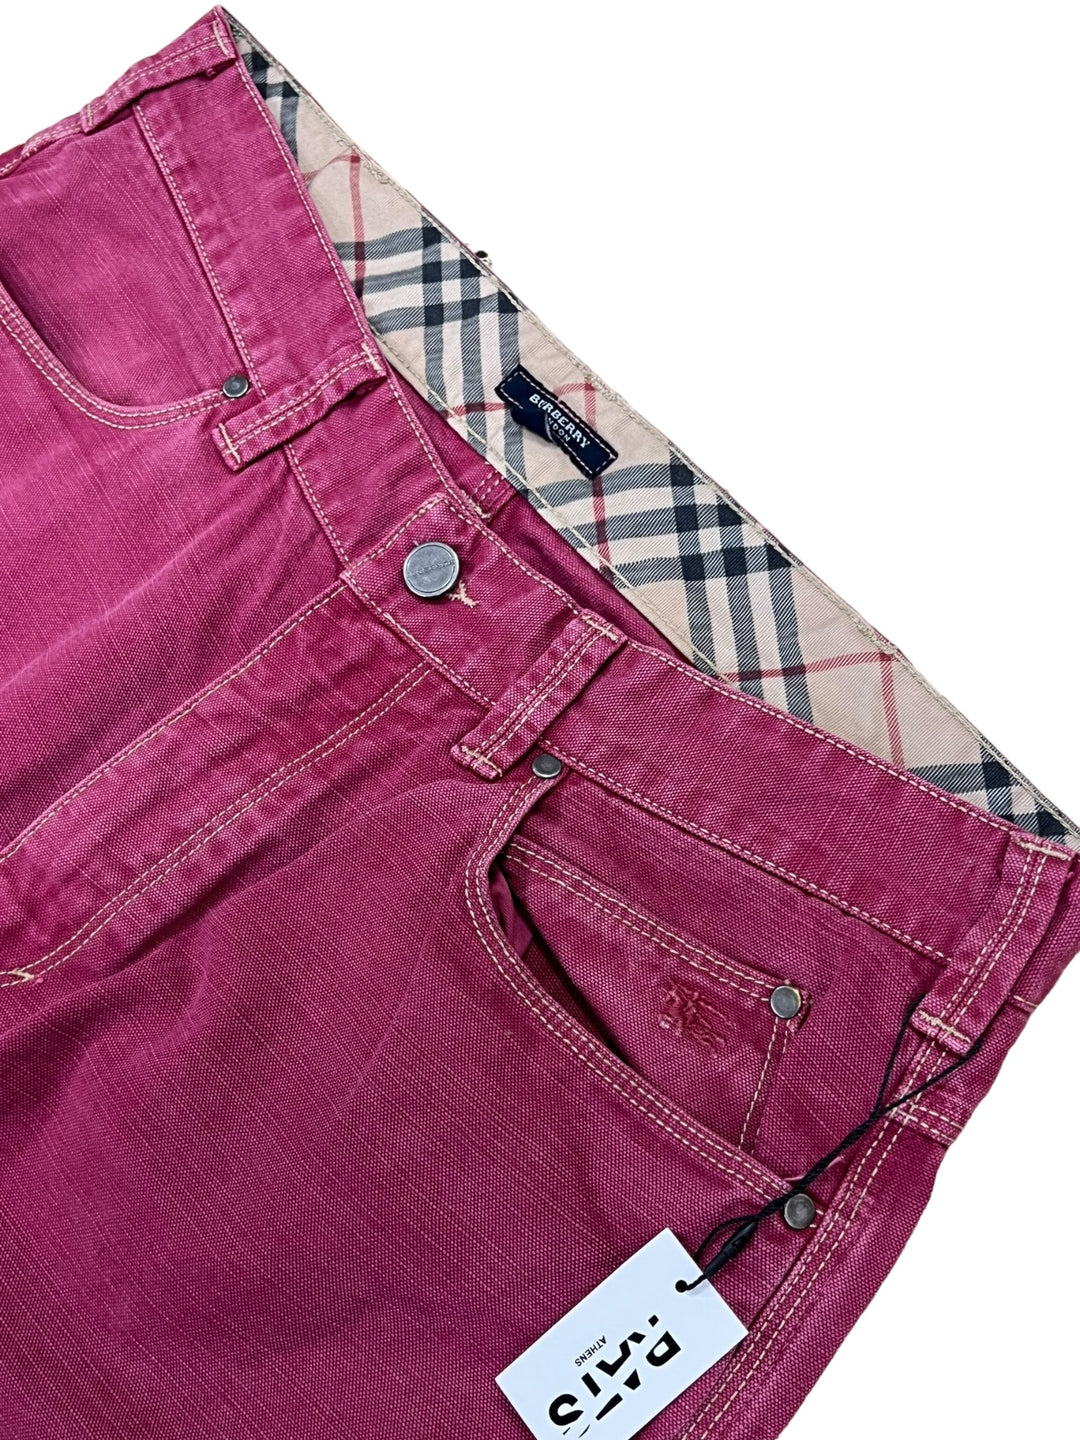 Burberry Vintage jeans Men’s Medium | 50